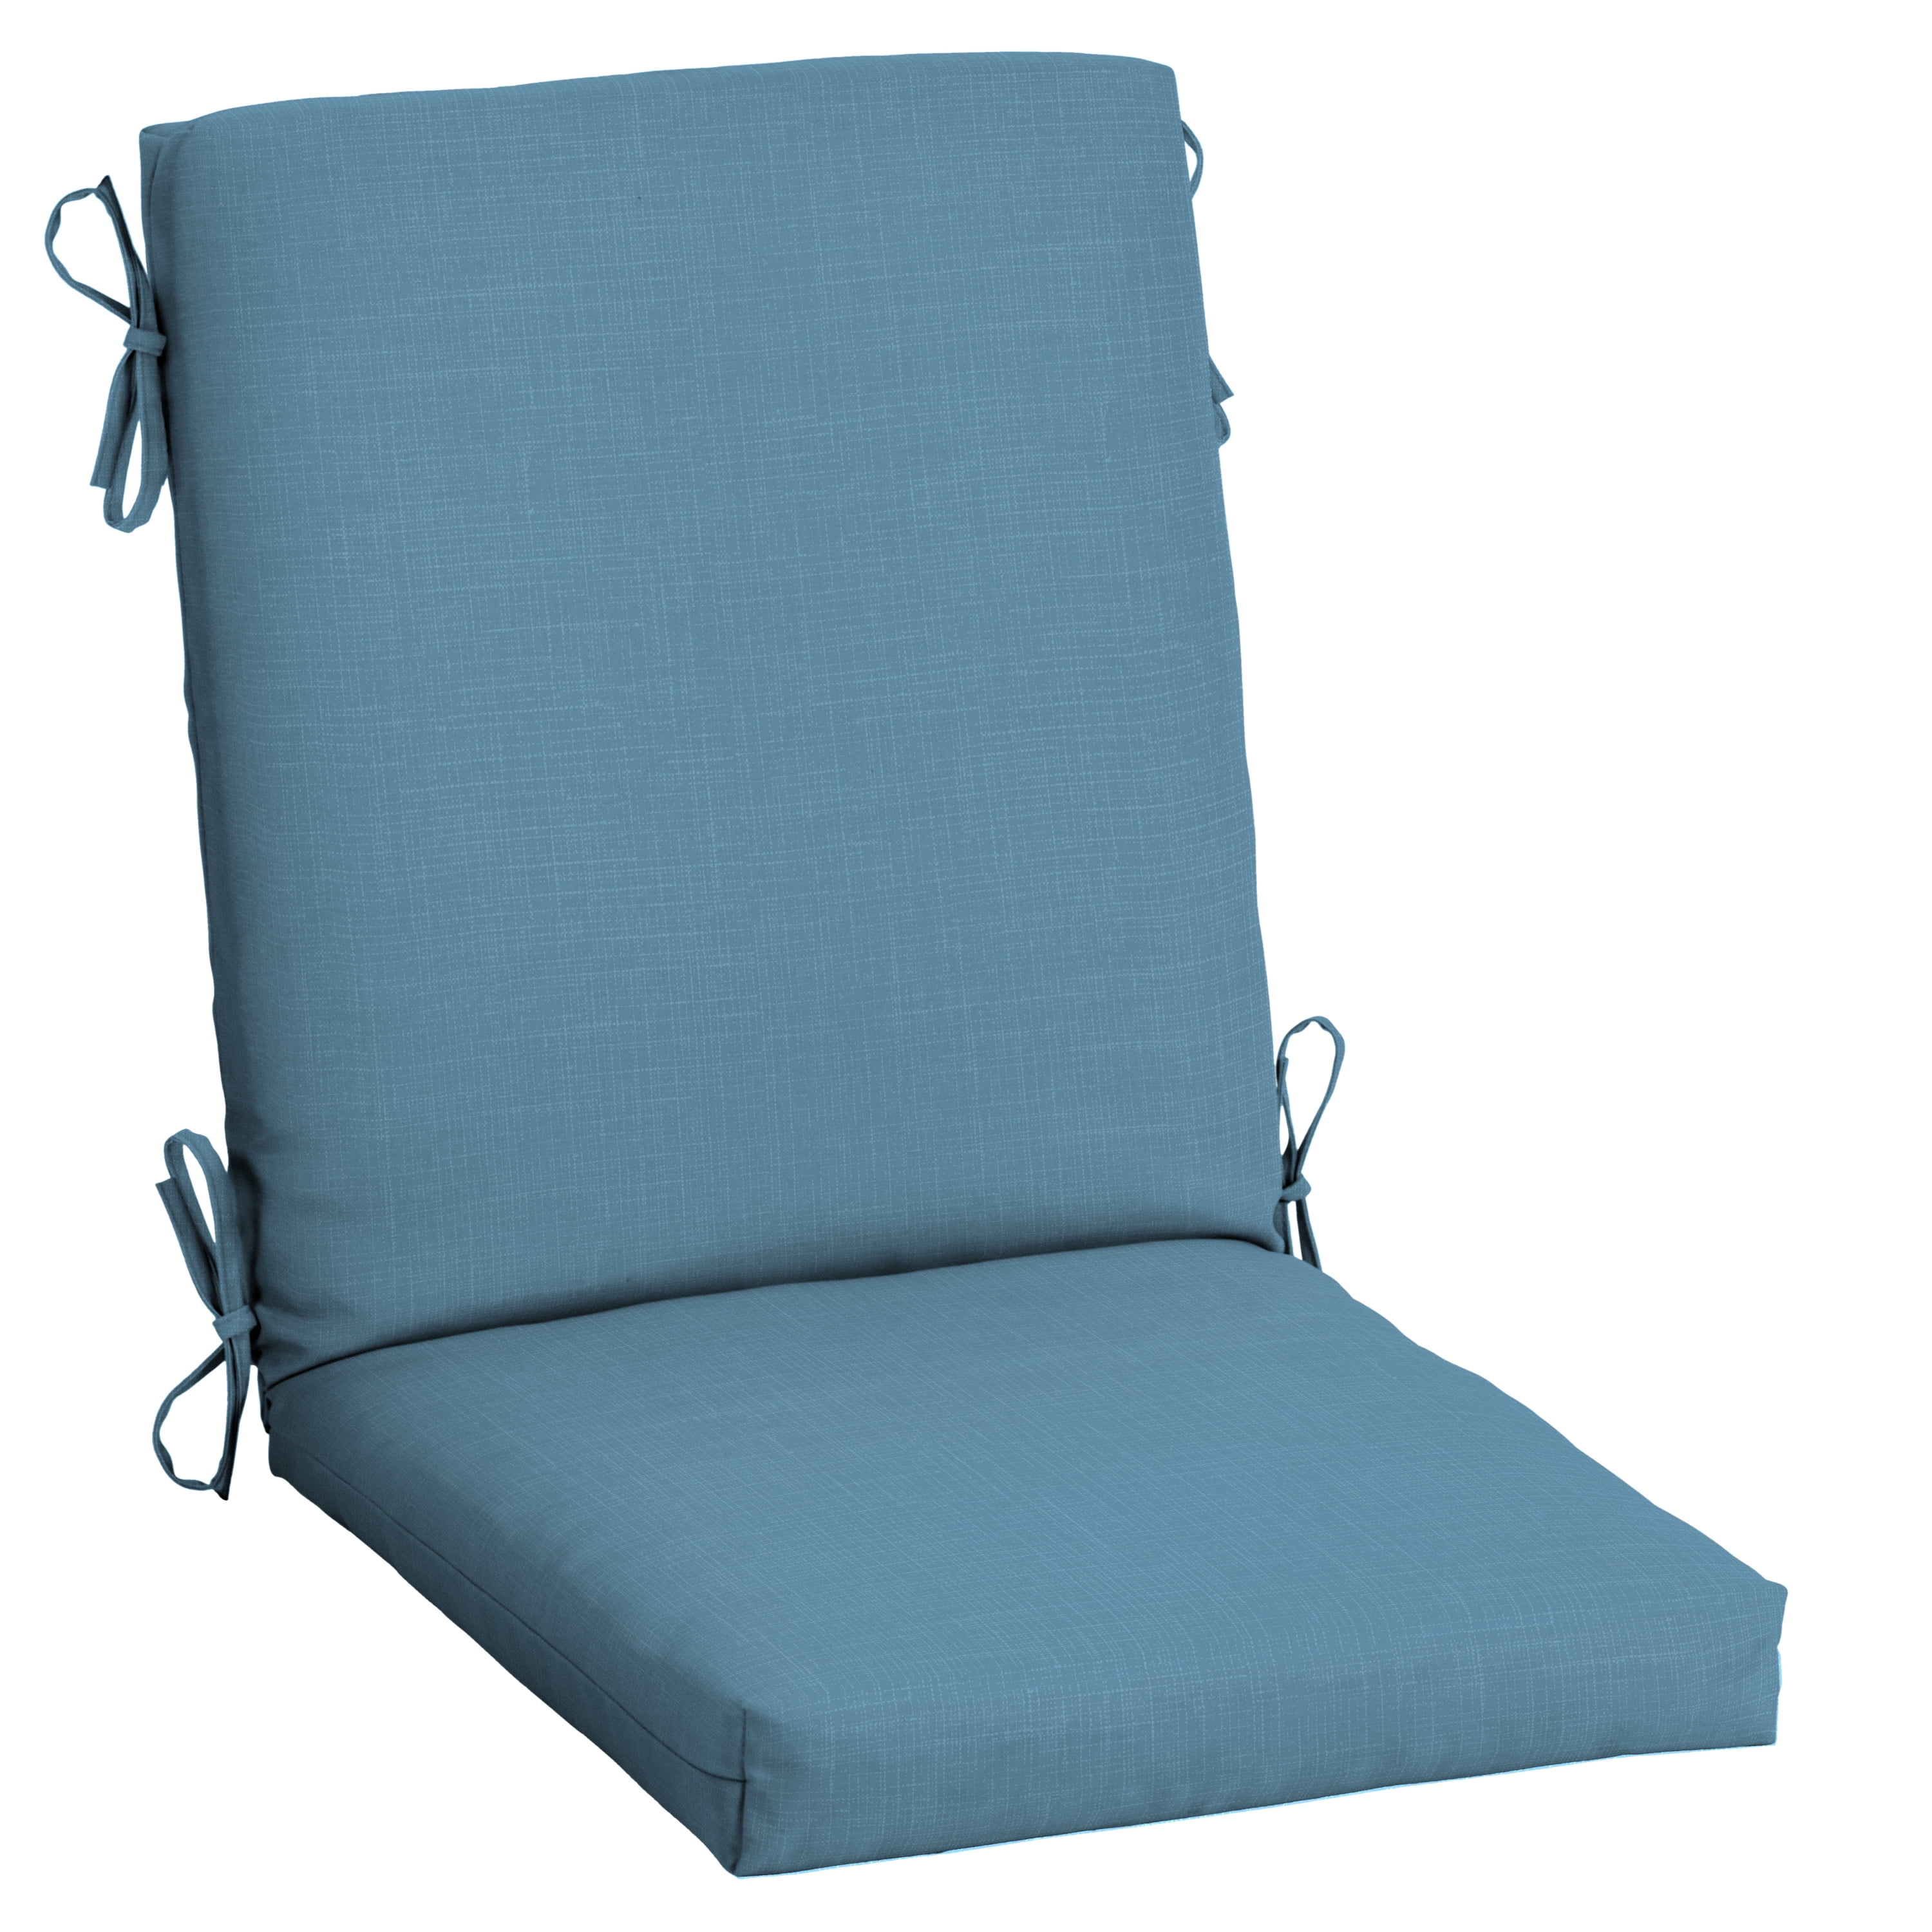 Faible Poisson Outdoor Chair Cushions, 20 x 20 Inch Waterproof